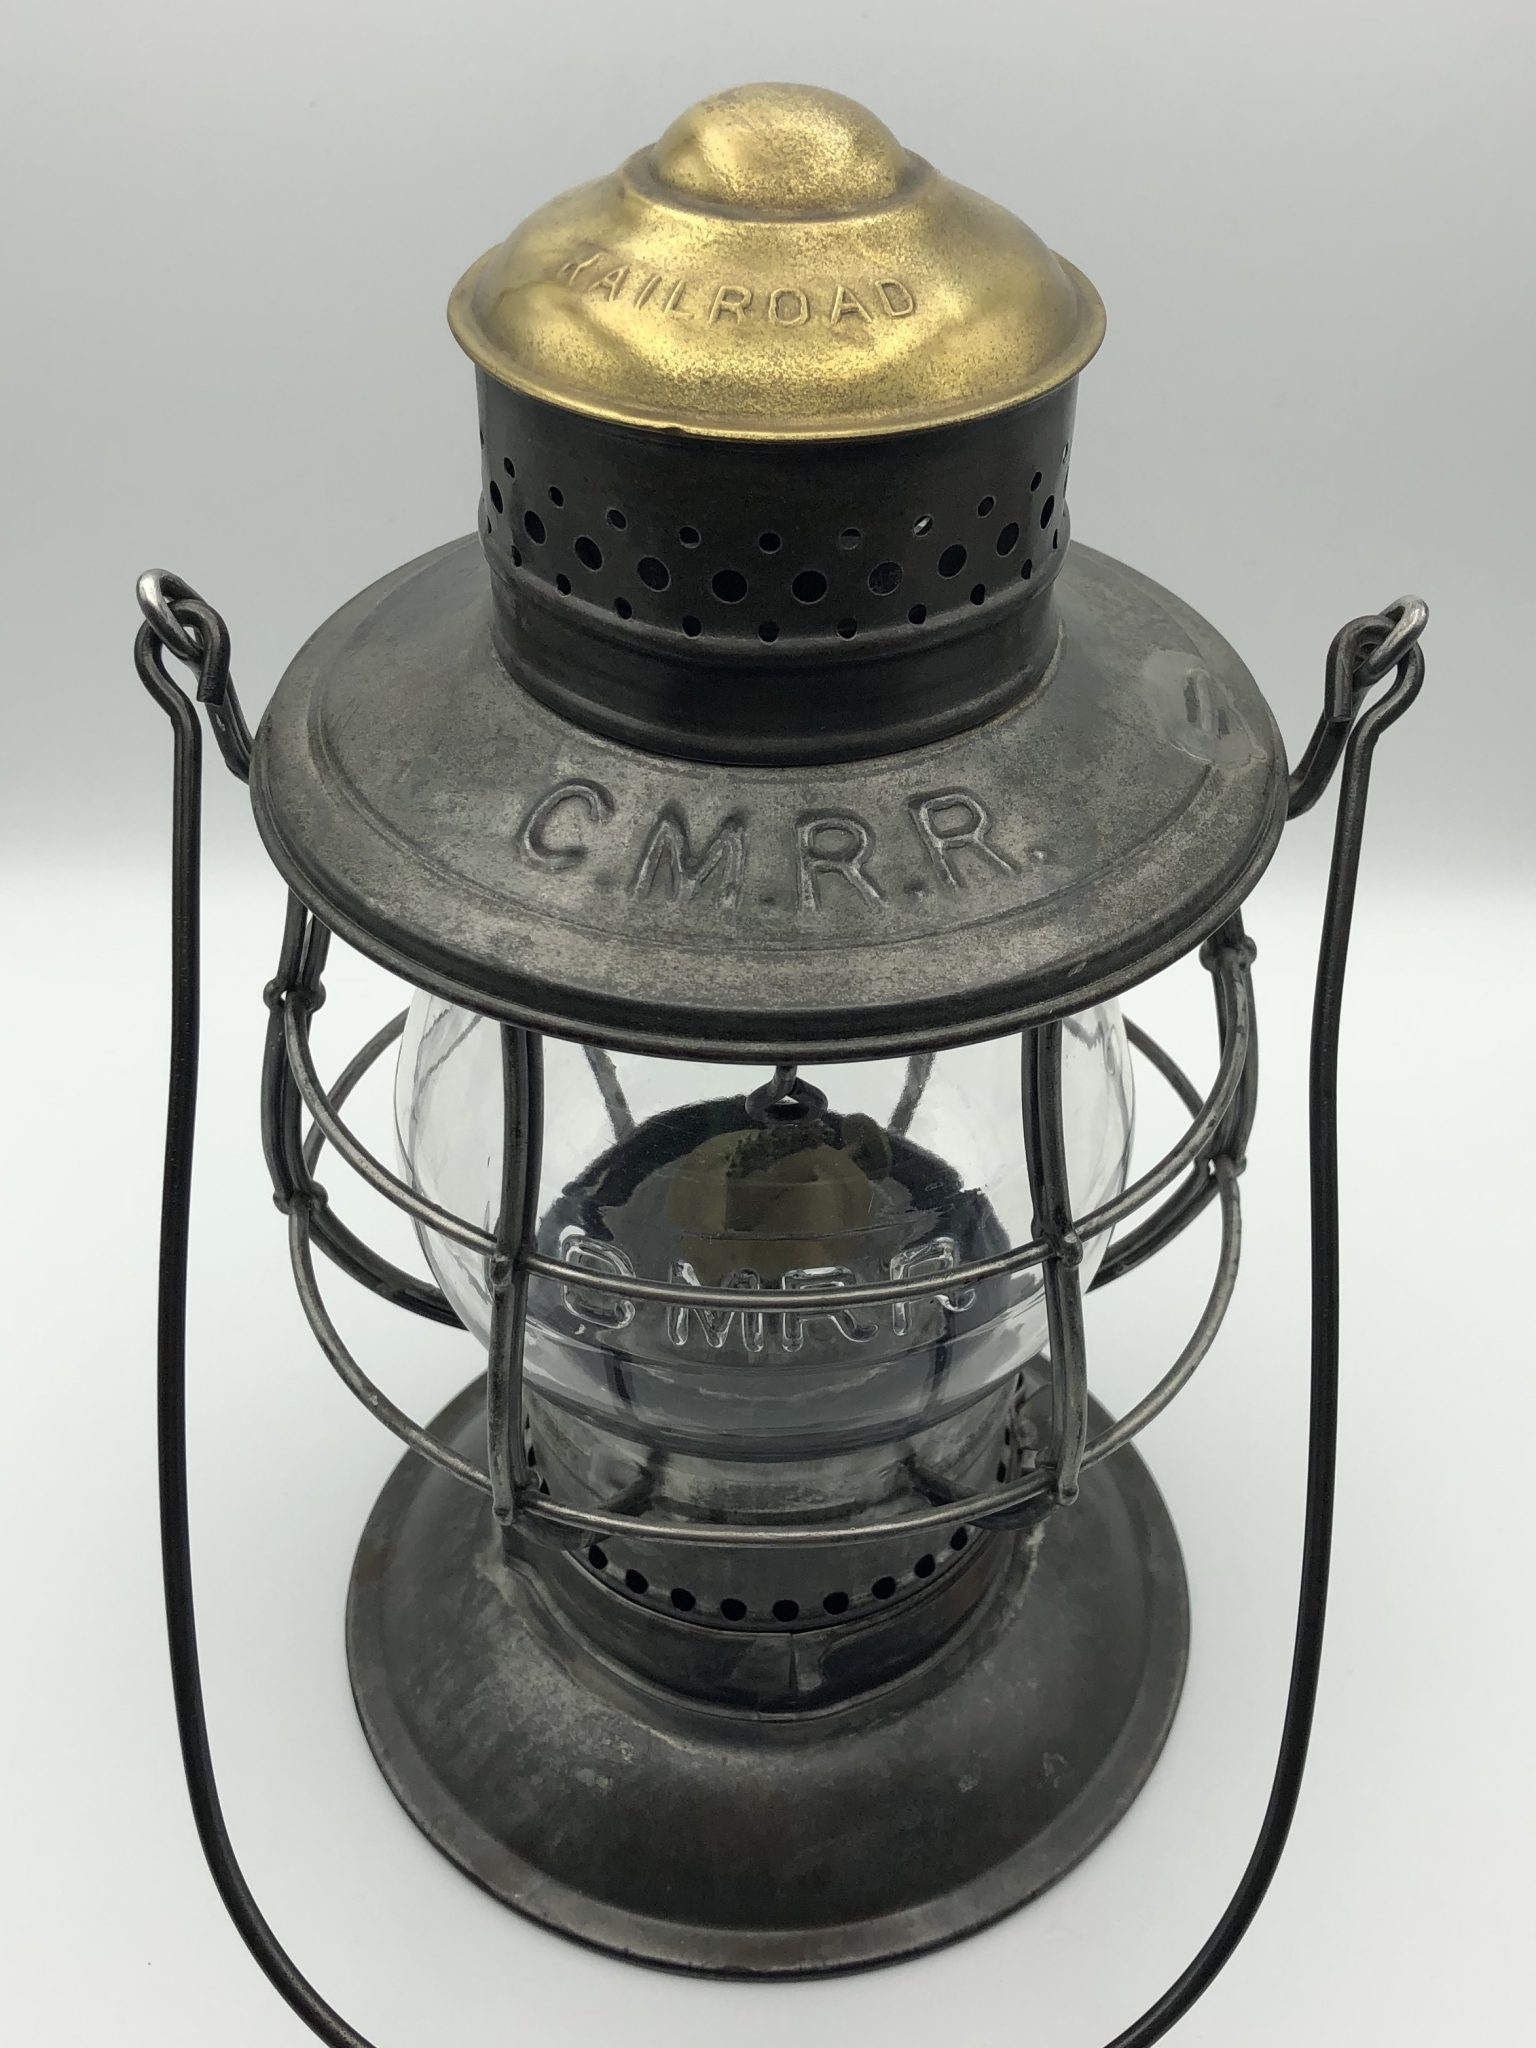 CMRR Brasstop Railroad Lantern